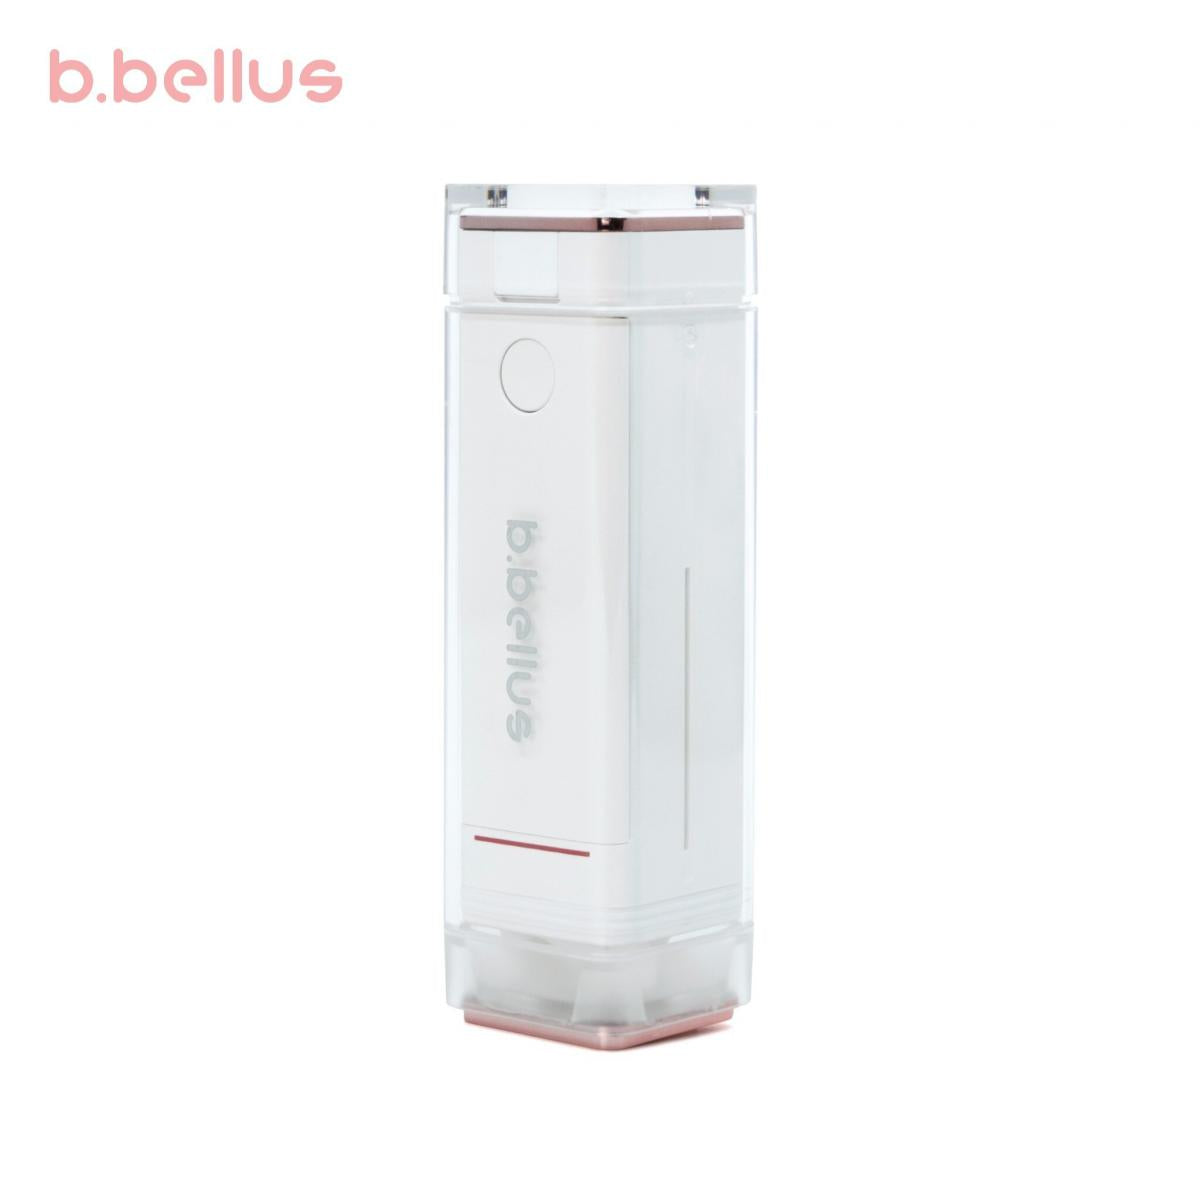 b.bellus - Portable water flosser | Electric water flosser | Dental rinser | Cordless | Dental rinser | Retractable BB0004 